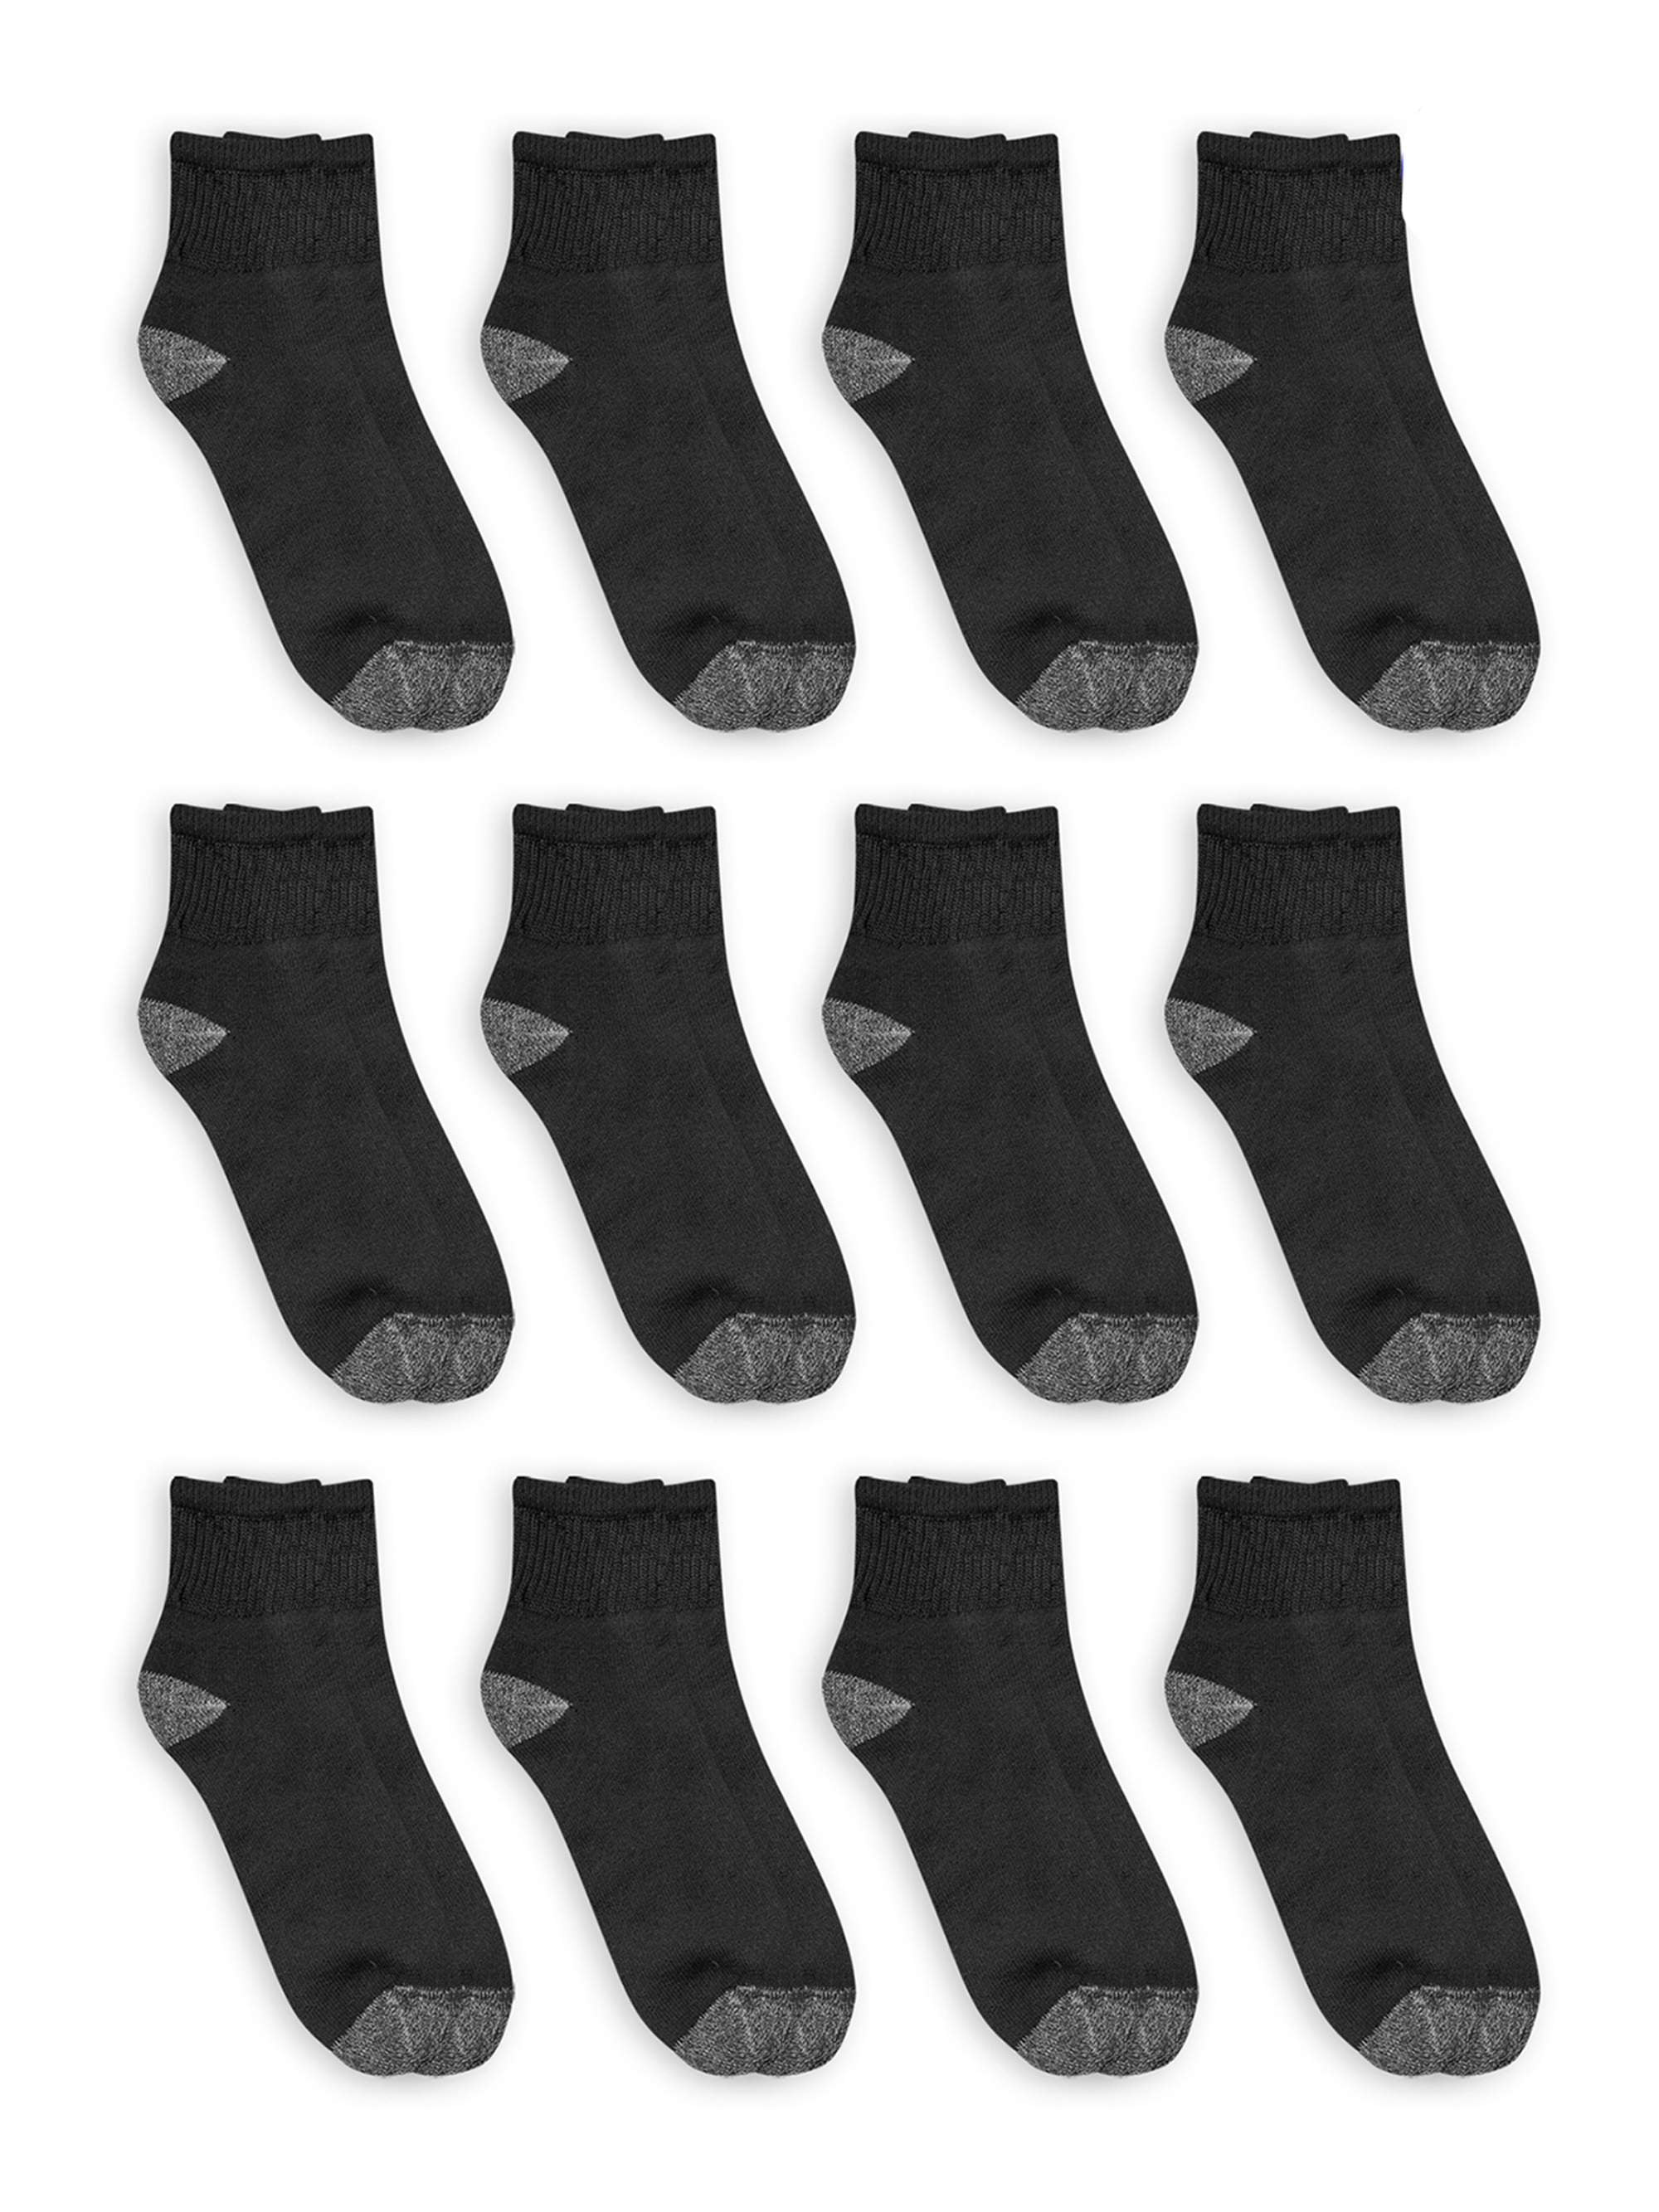 Cotton Ankle Socks Black White Sport Trainer 5 packs One Size 